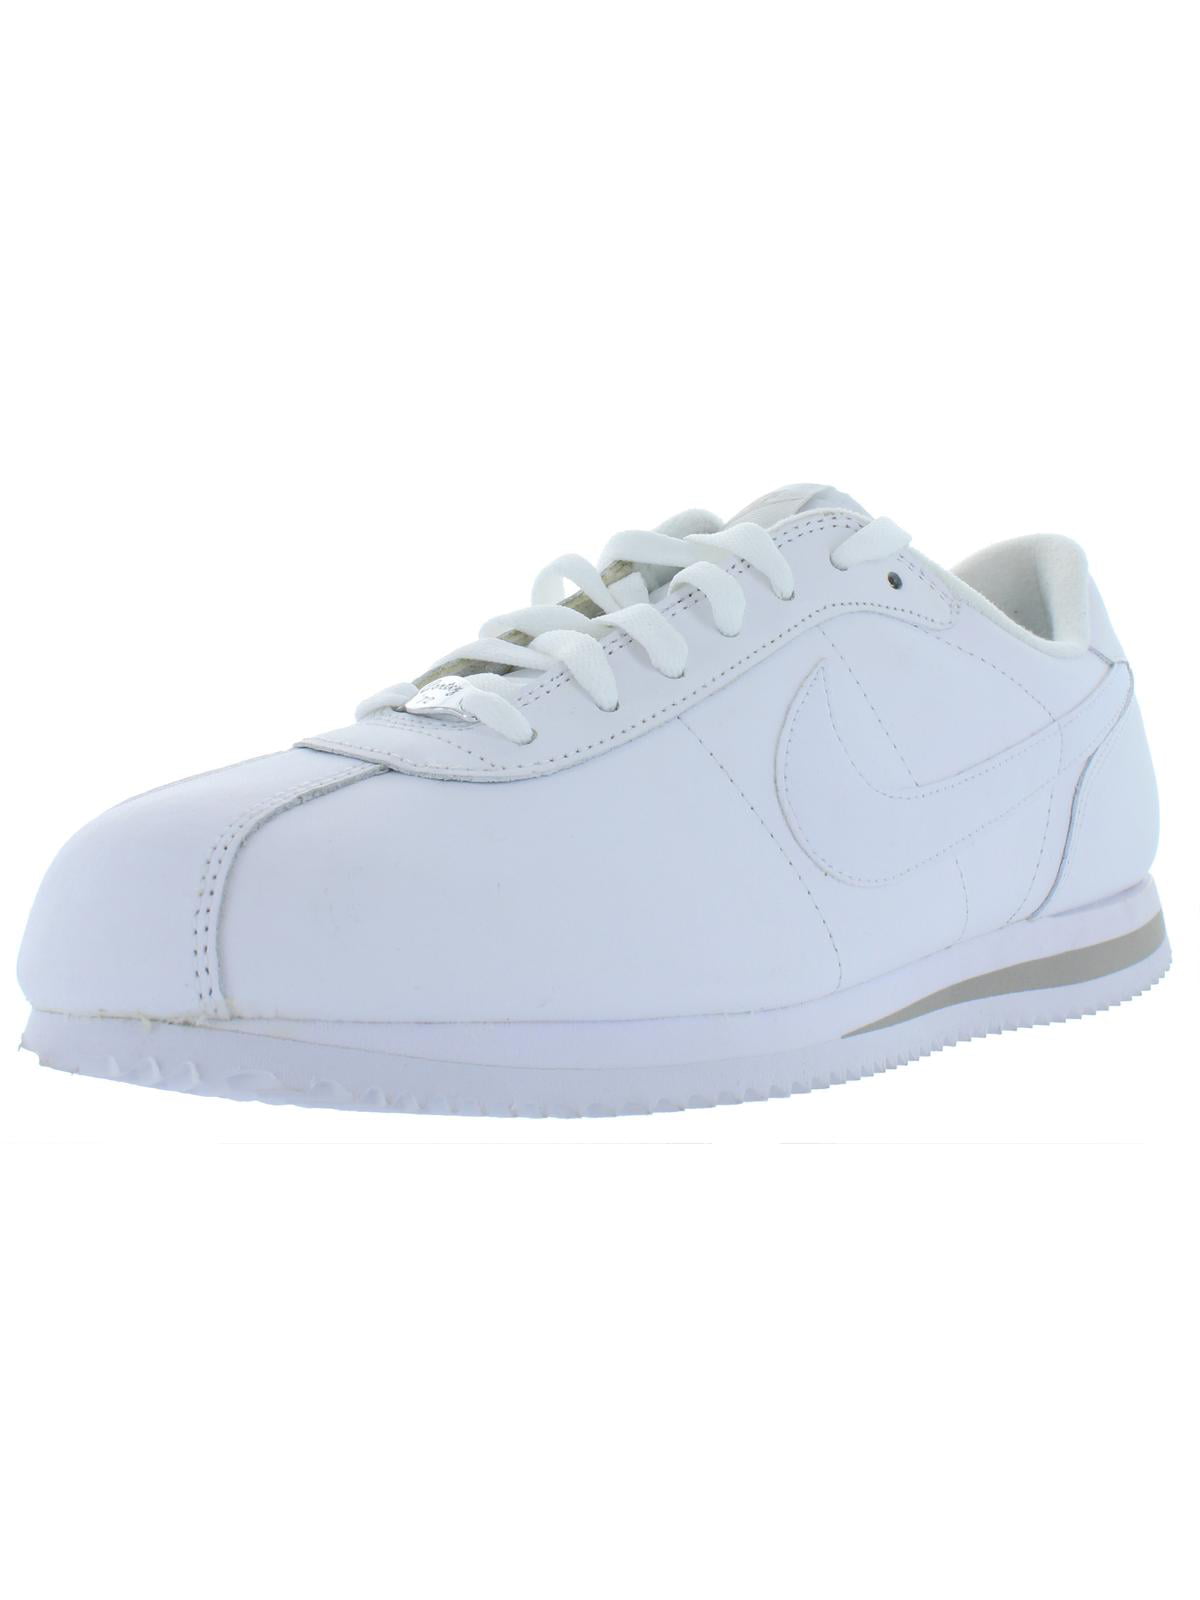 Nike - Nike Mens Cortez Basic Leather Low Top Fashion Sneakers White 11 ...